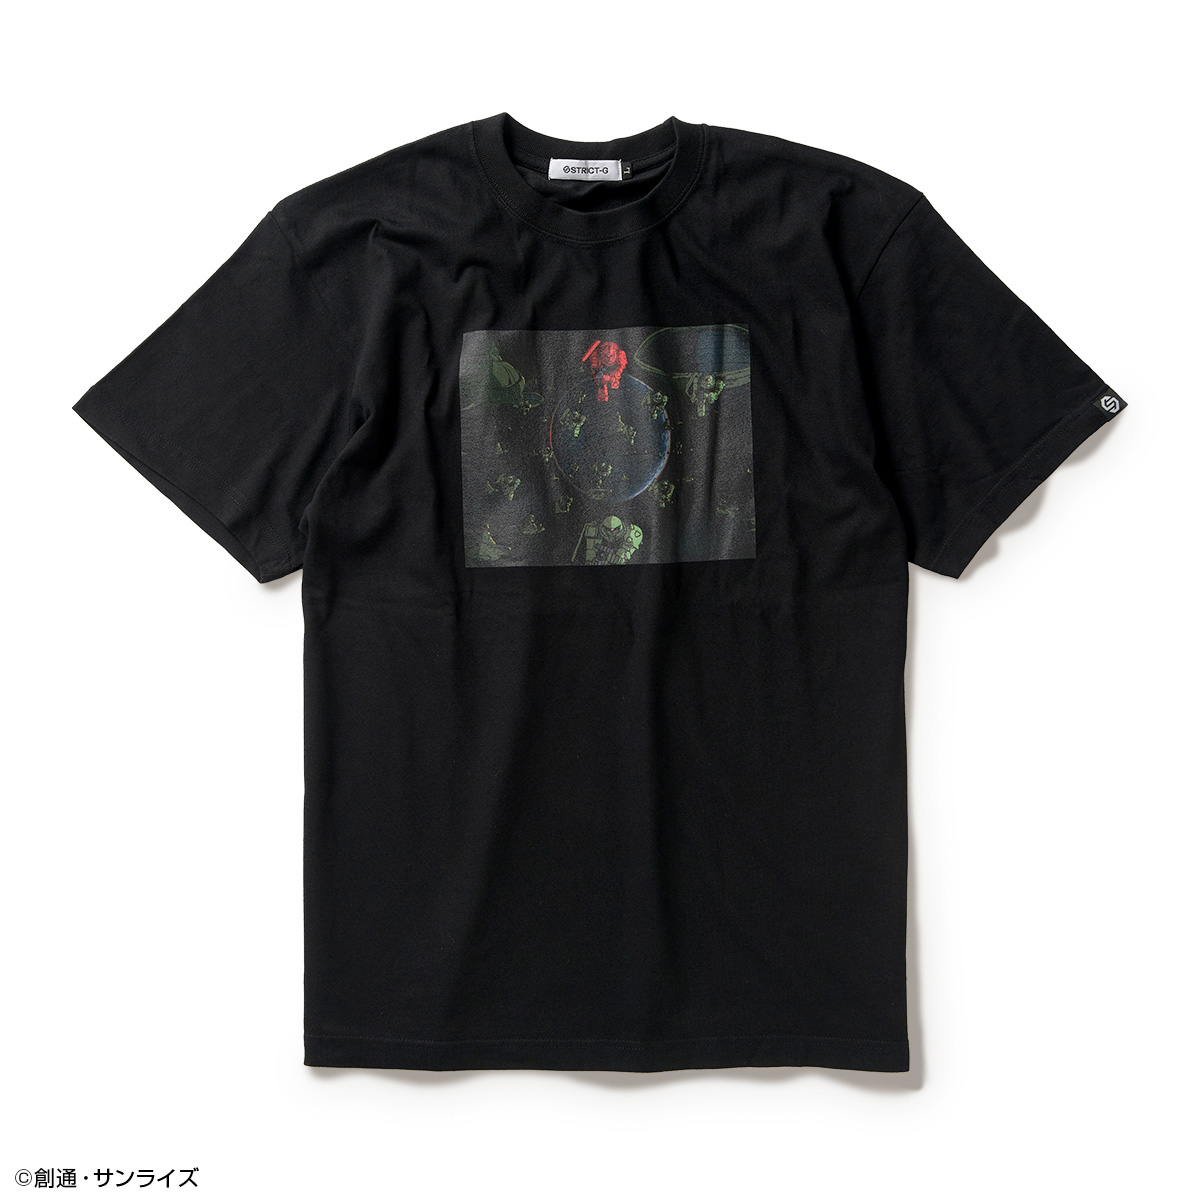 STRICT-G『機動戦士ガンダム』Tシャツコレクション CHAR AZNABLE 001